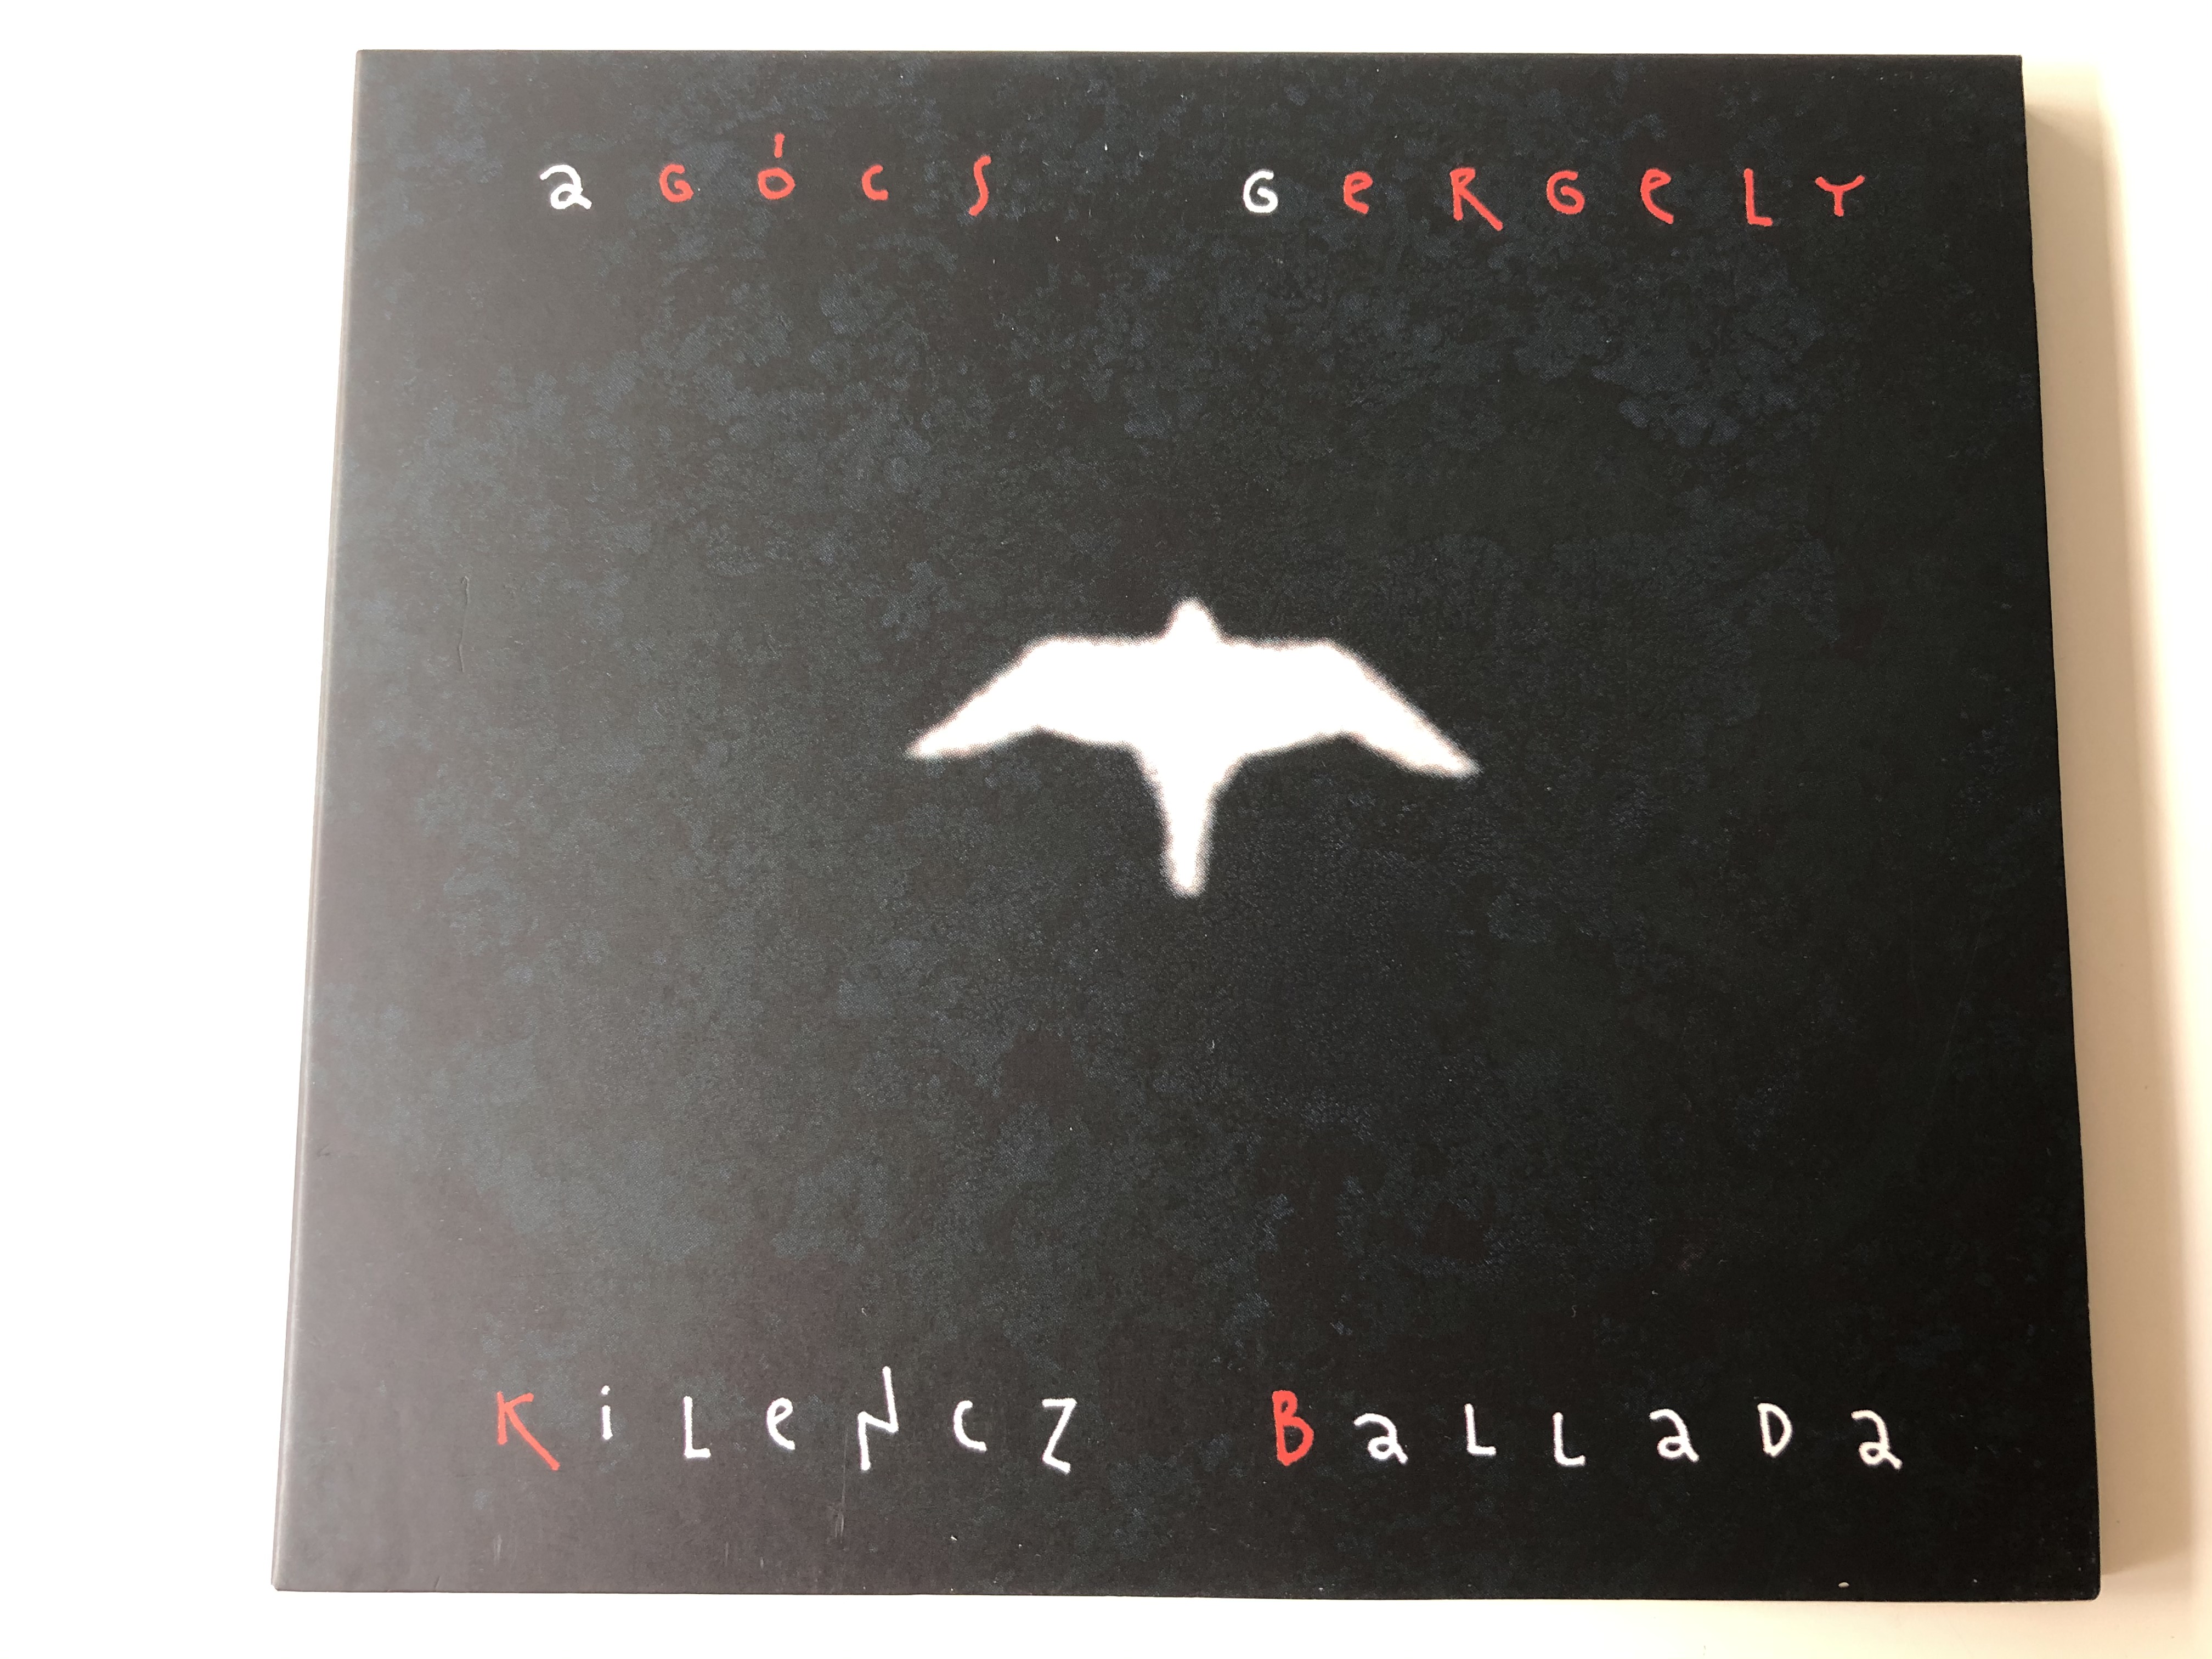 ag-cs-gergely-kilencz-ballada-fon-records-audio-cd-2005-fa224-2-1-.jpg